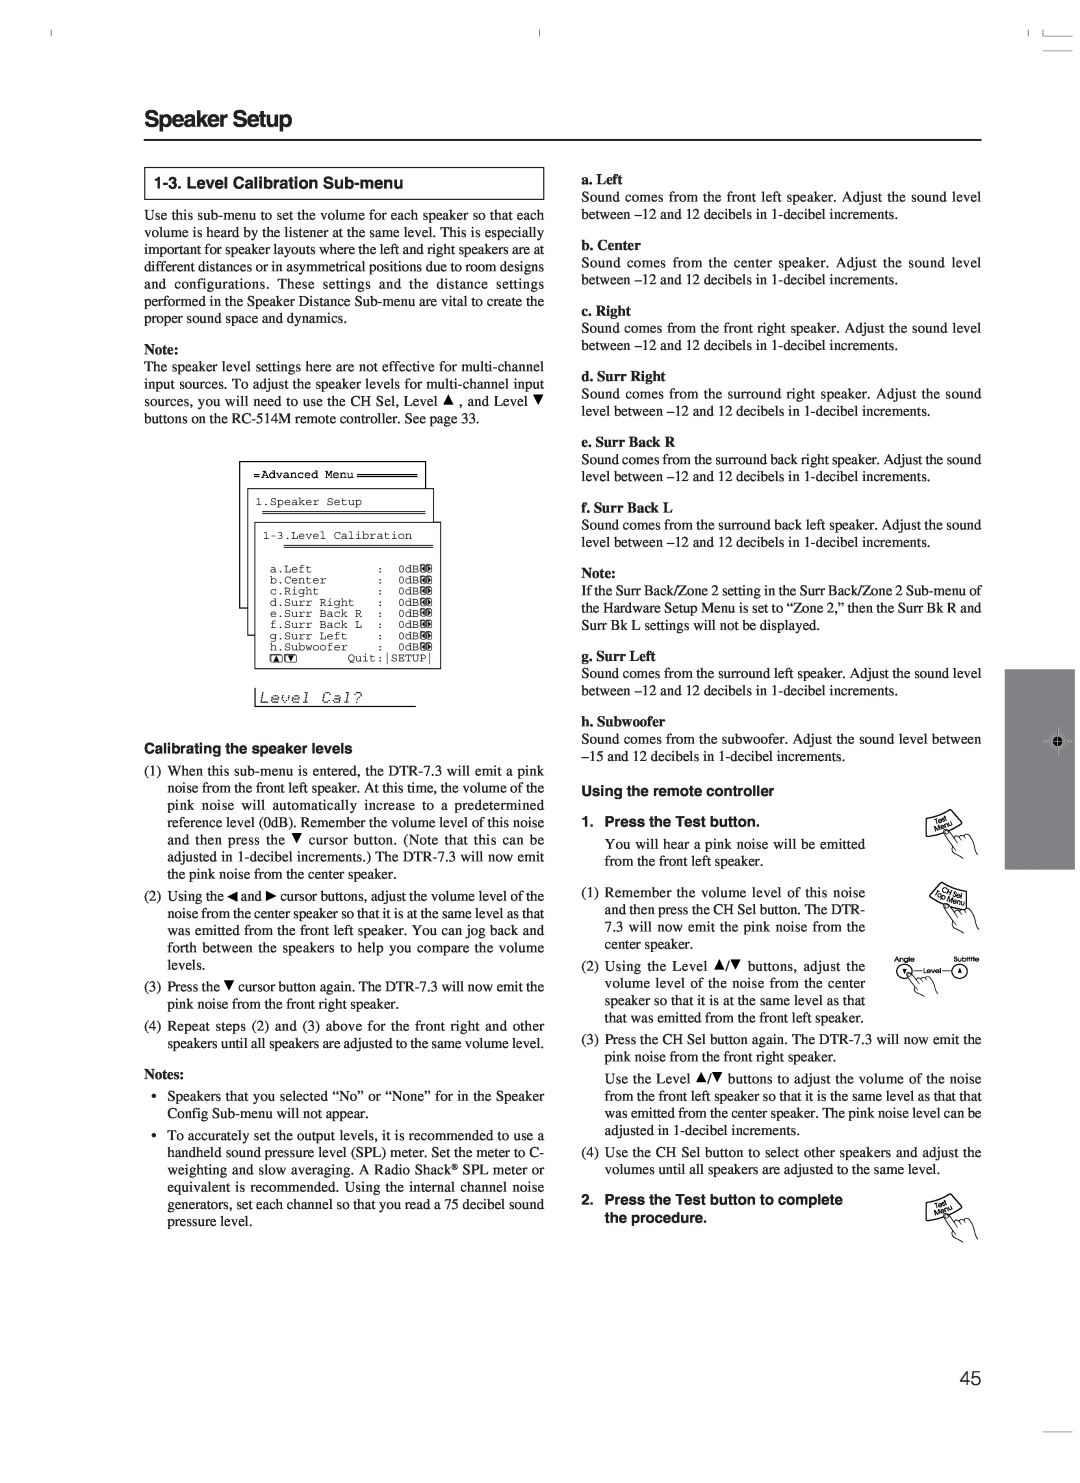 Integra DTR-7.3 Level Calibration Sub-menu, Speaker Setup, Notes, a. Left, b. Center, c. Right, d. Surr Right 